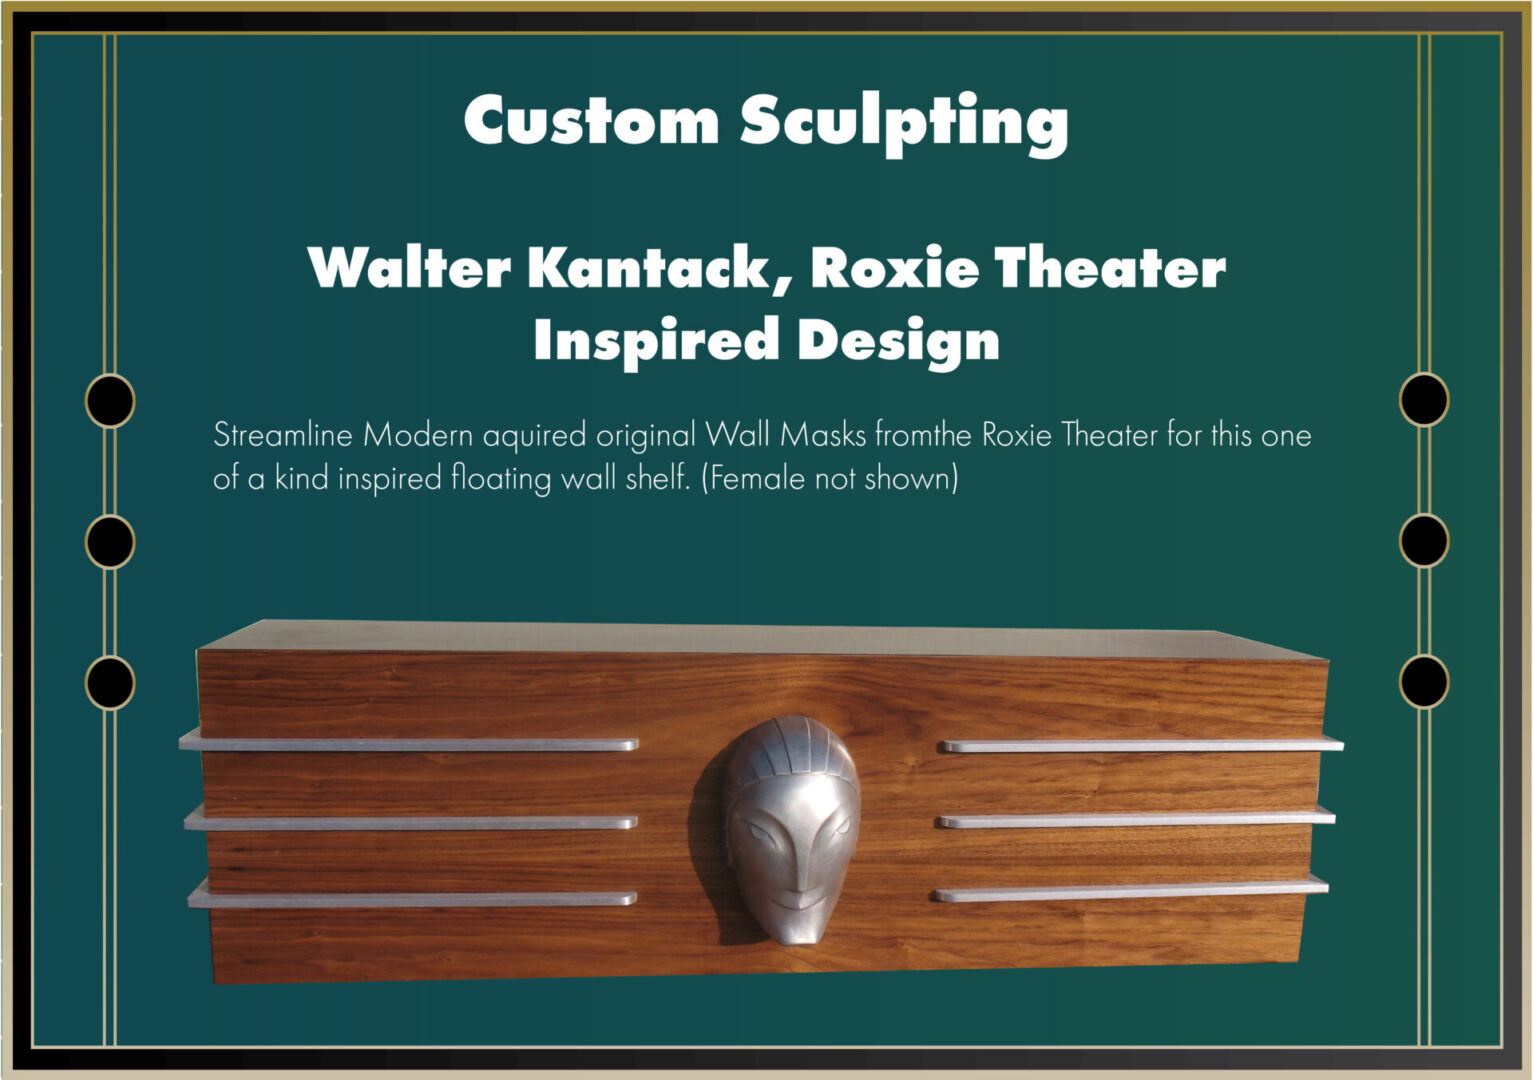 Custom Sculpting Walter Kantack and Roxie Theater